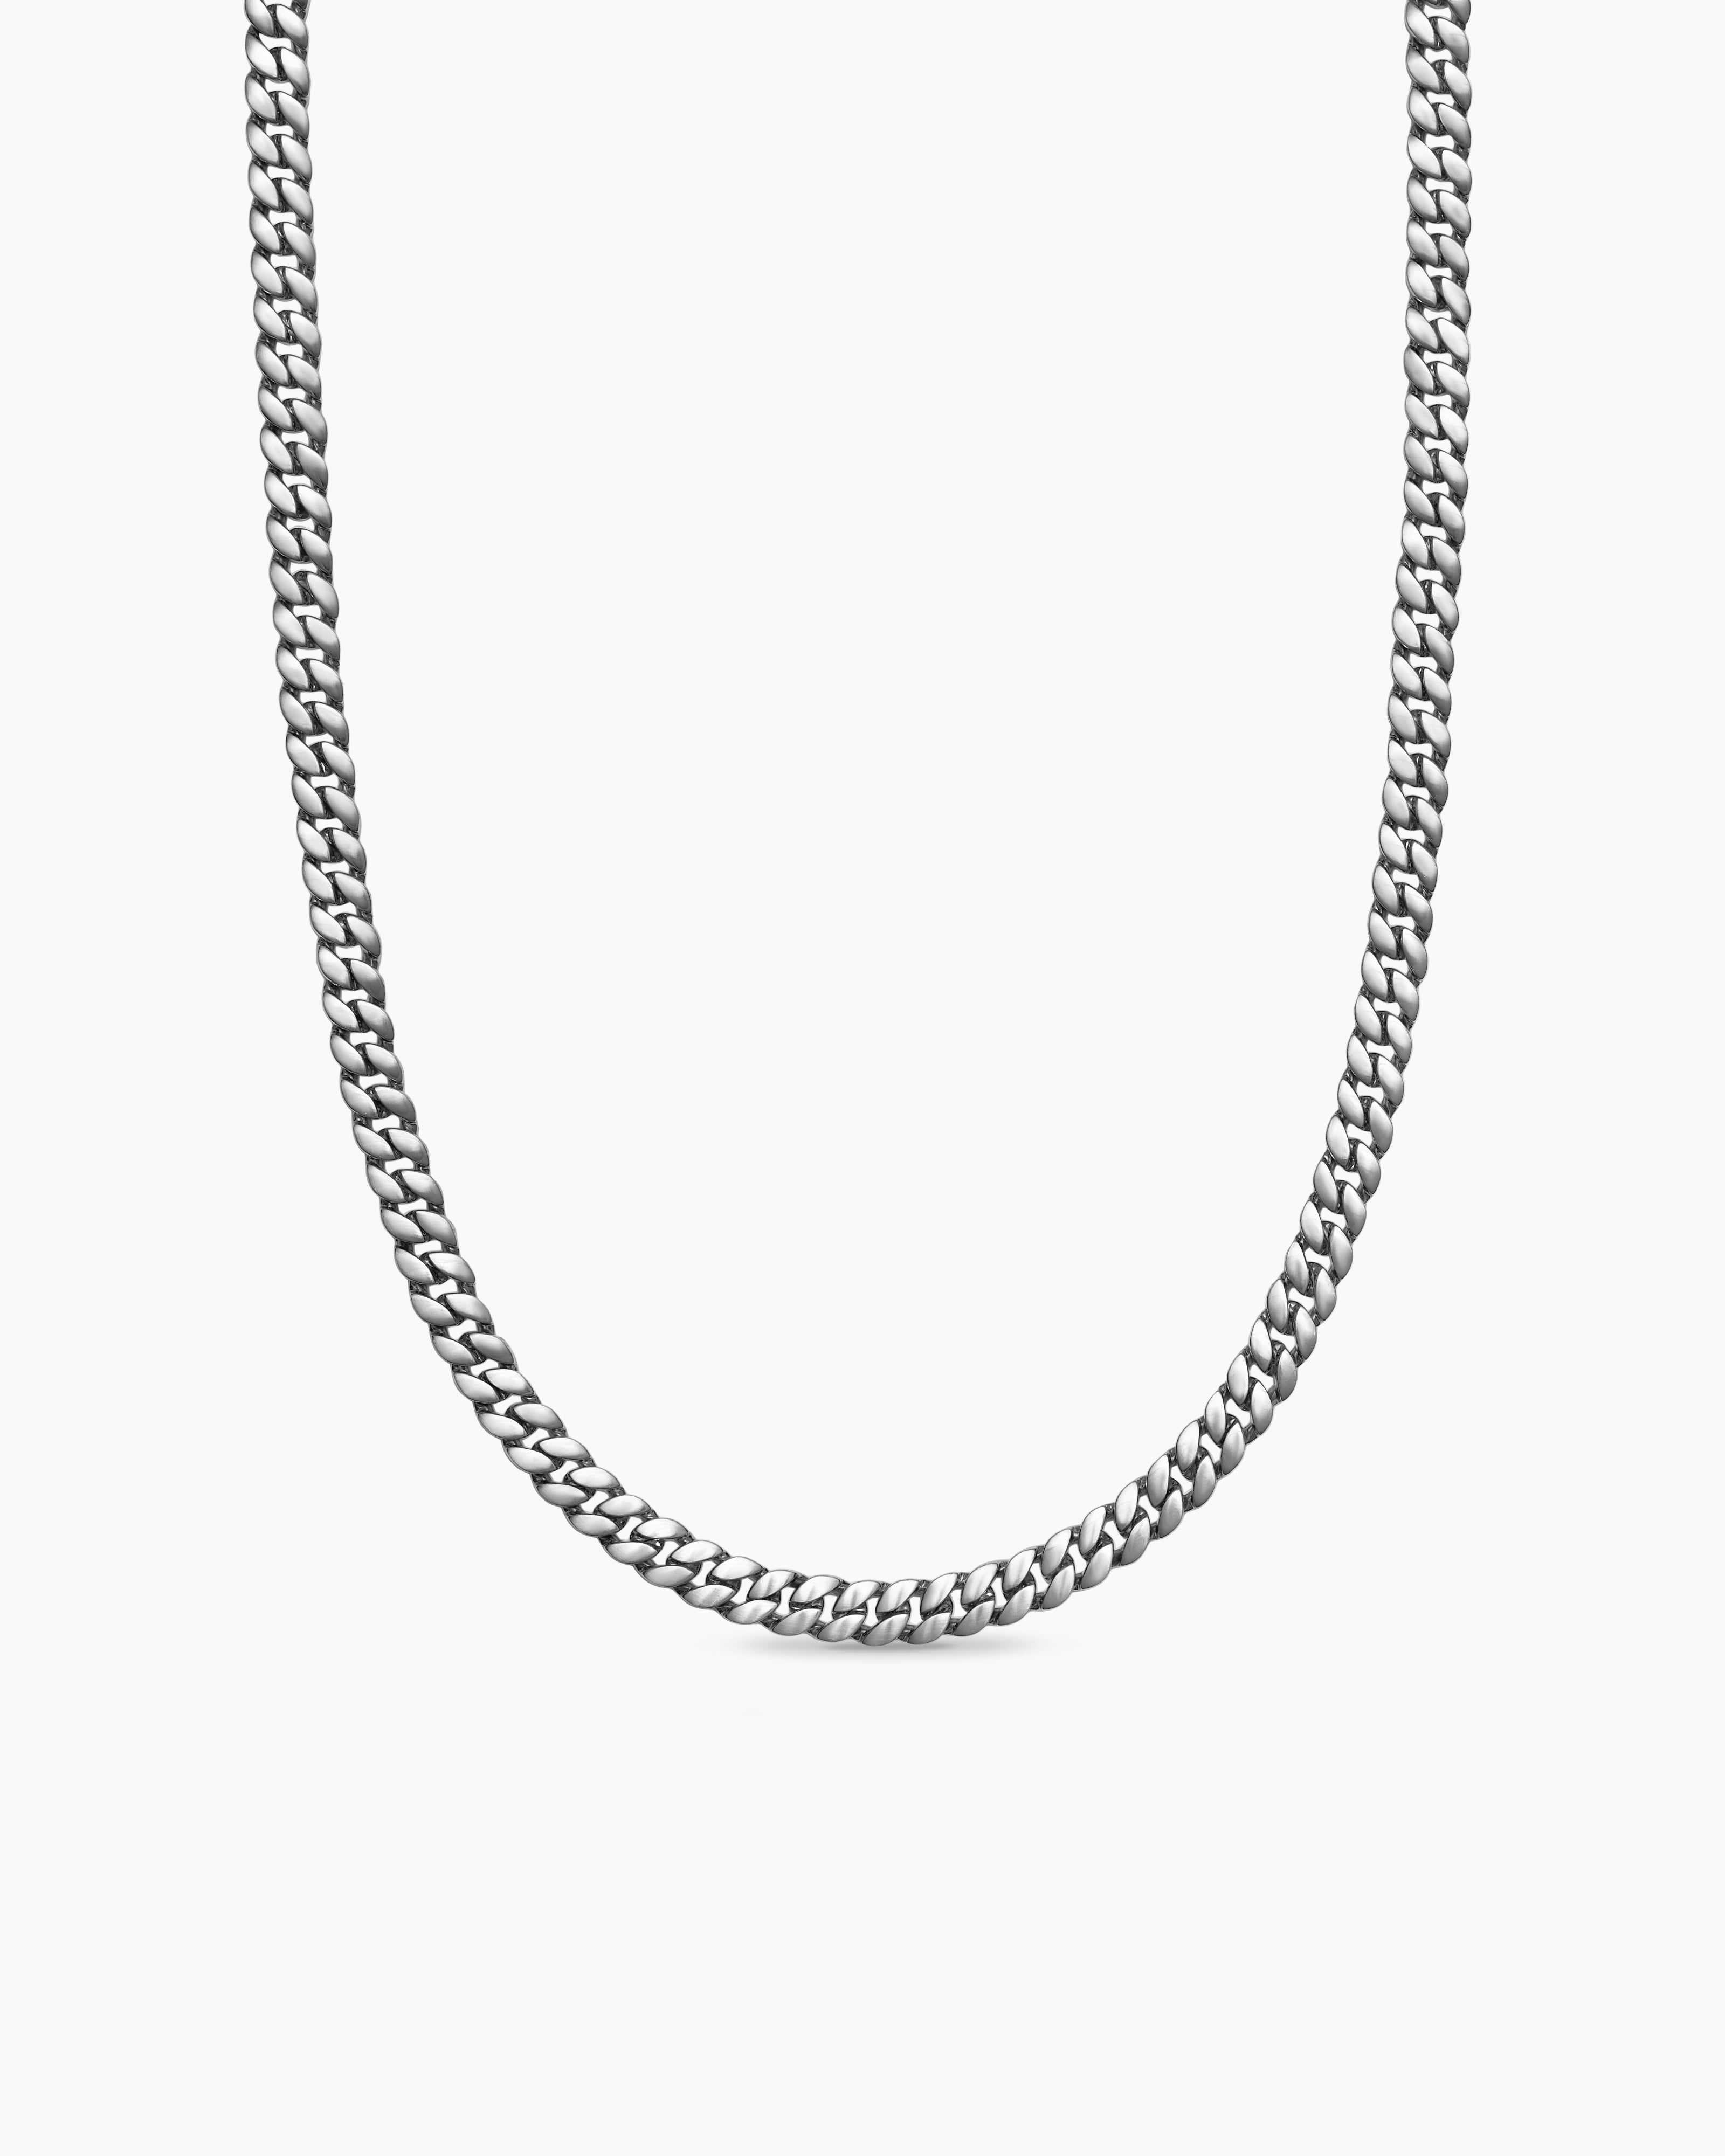 Curb Chain Necklace in Platinum, 6mm | David Yurman Canada